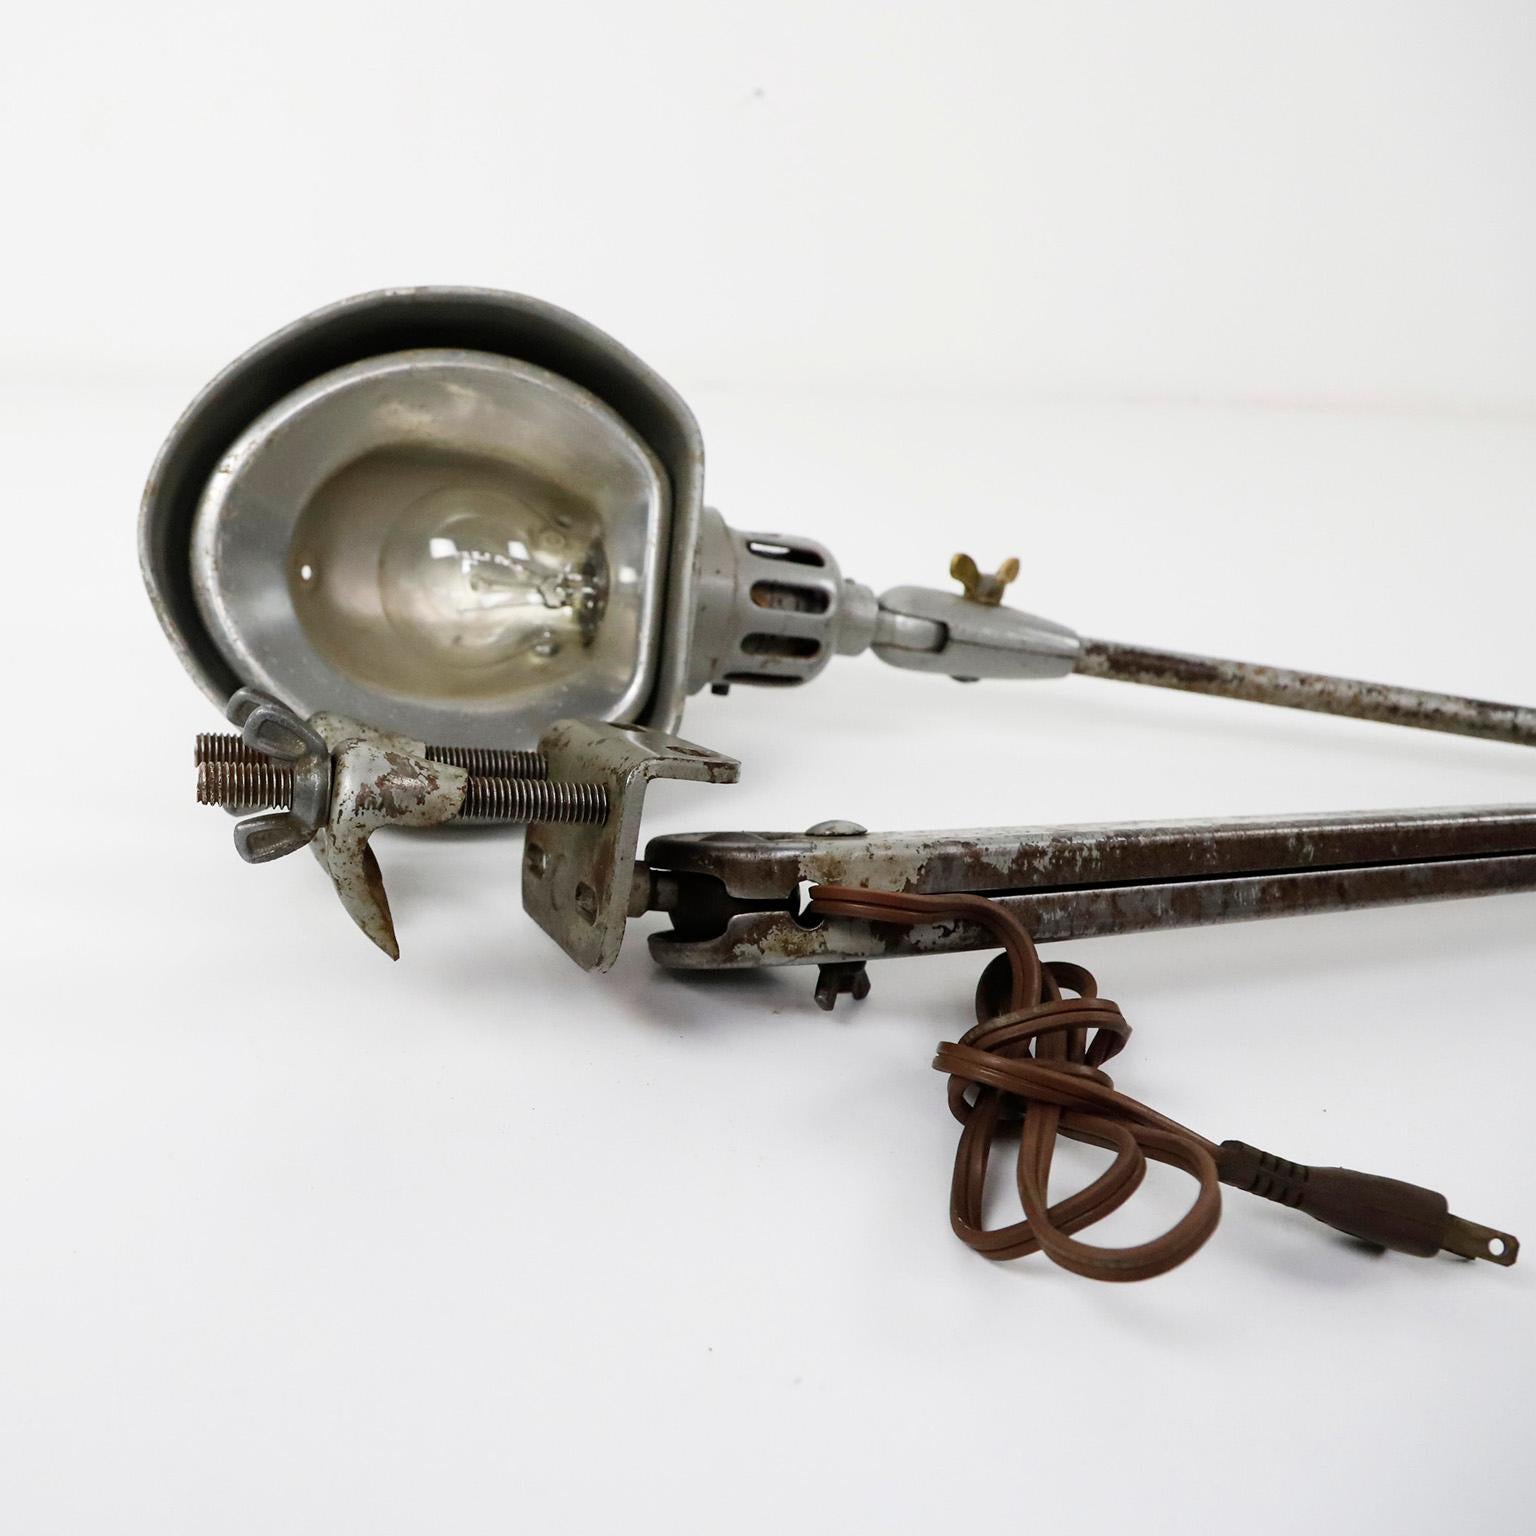 tischlampe vintage industrial